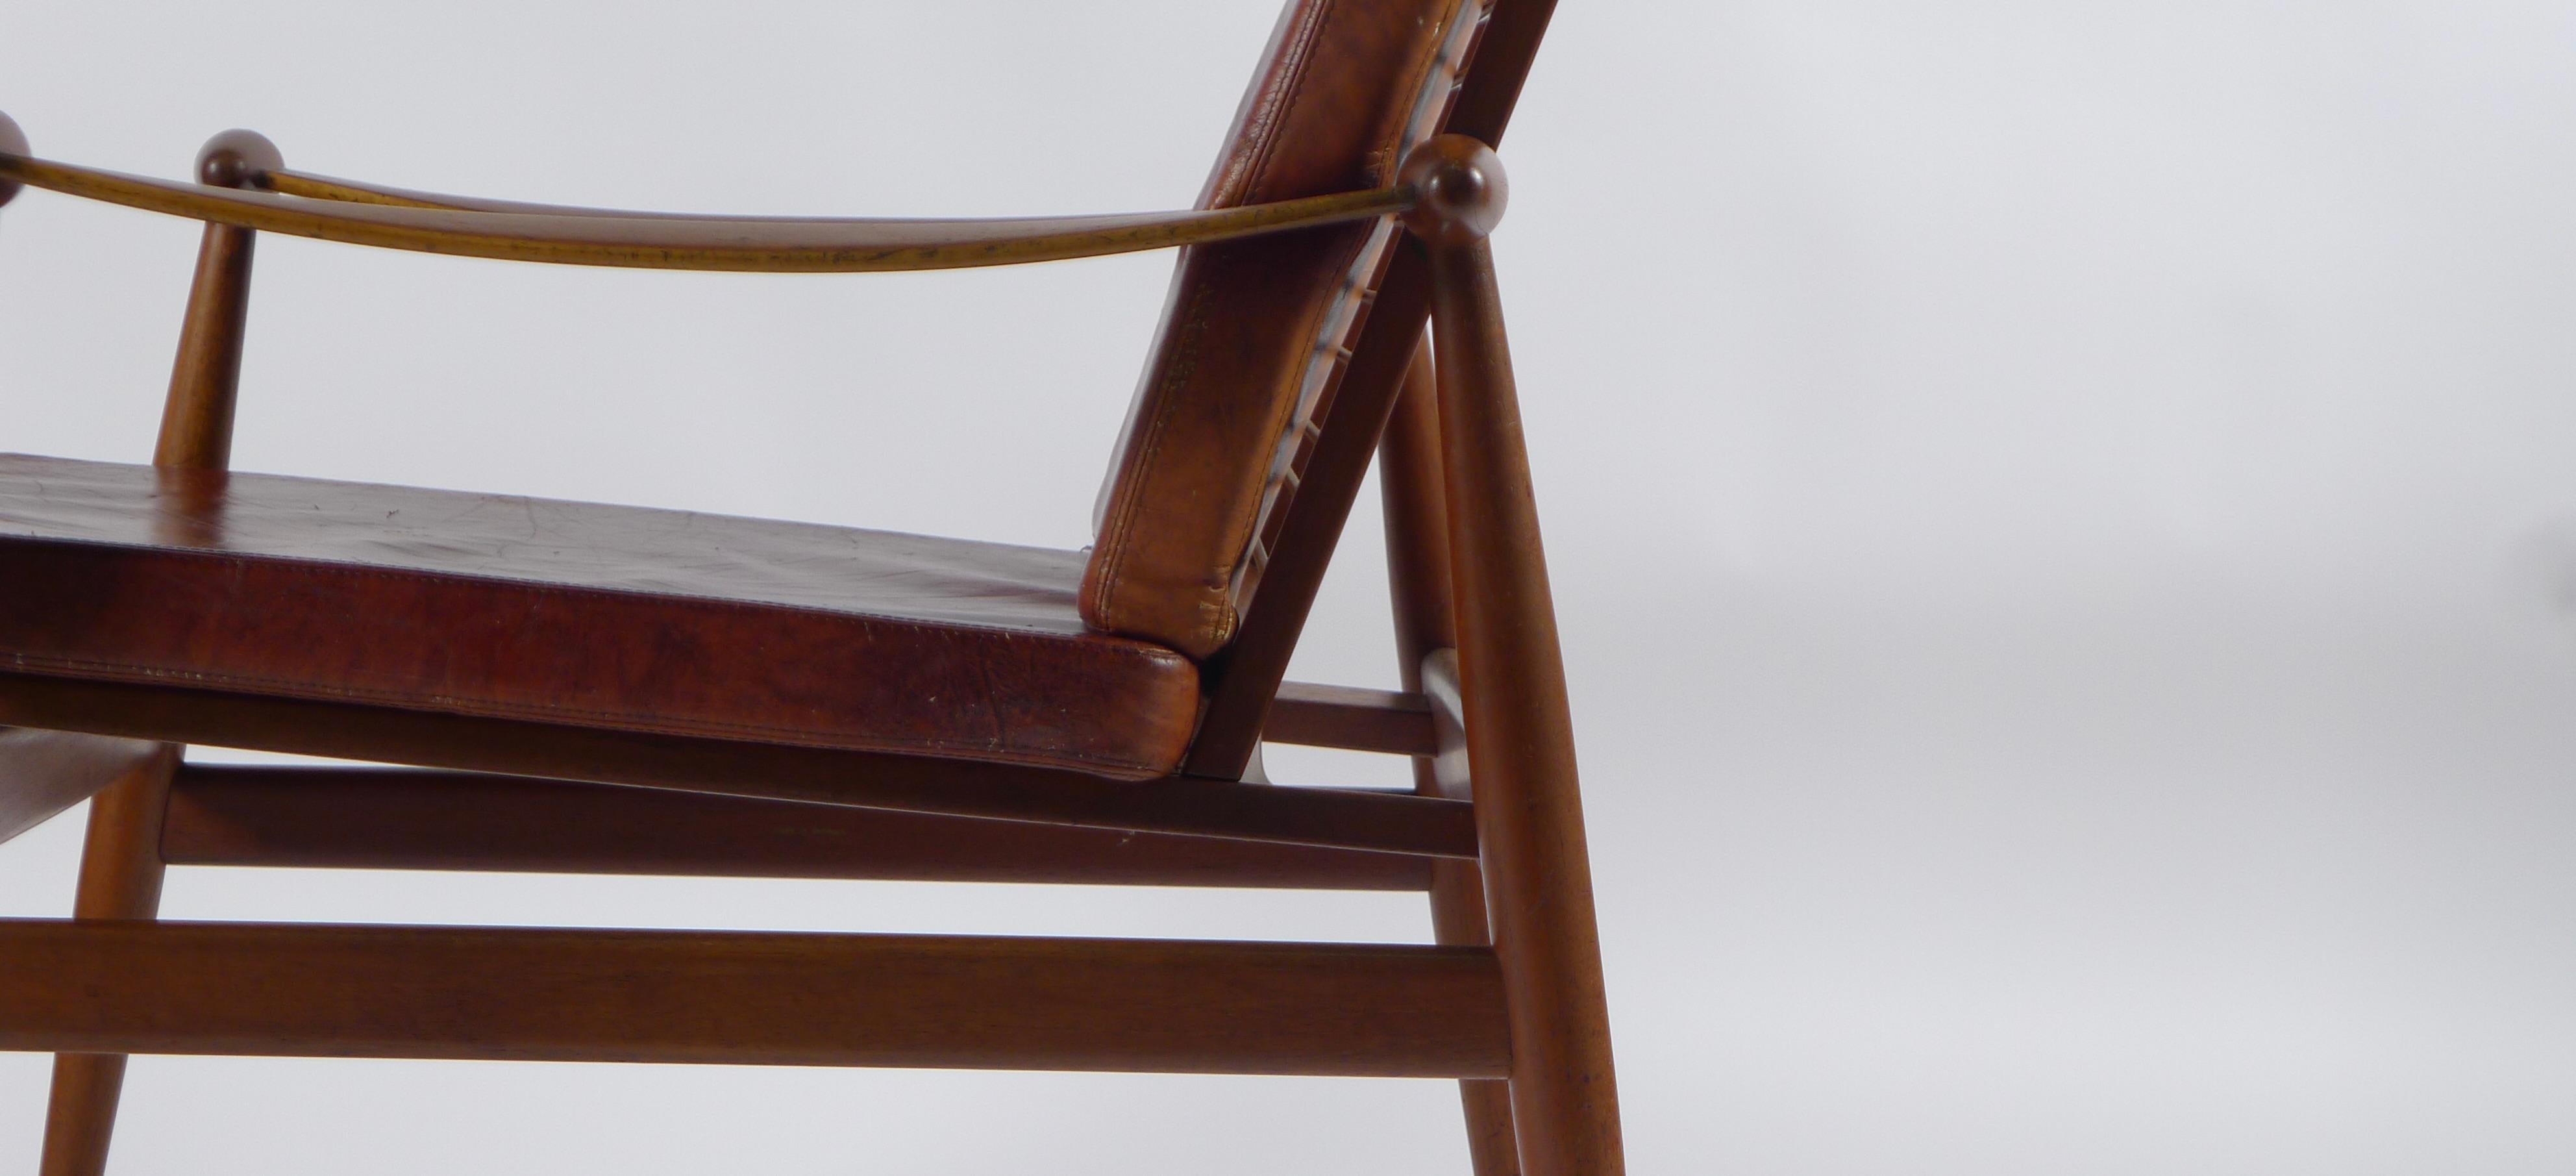 Danish Finn Juhl Spade Chair, Model Fd133, 1950s, Produced by France & Son, with Label